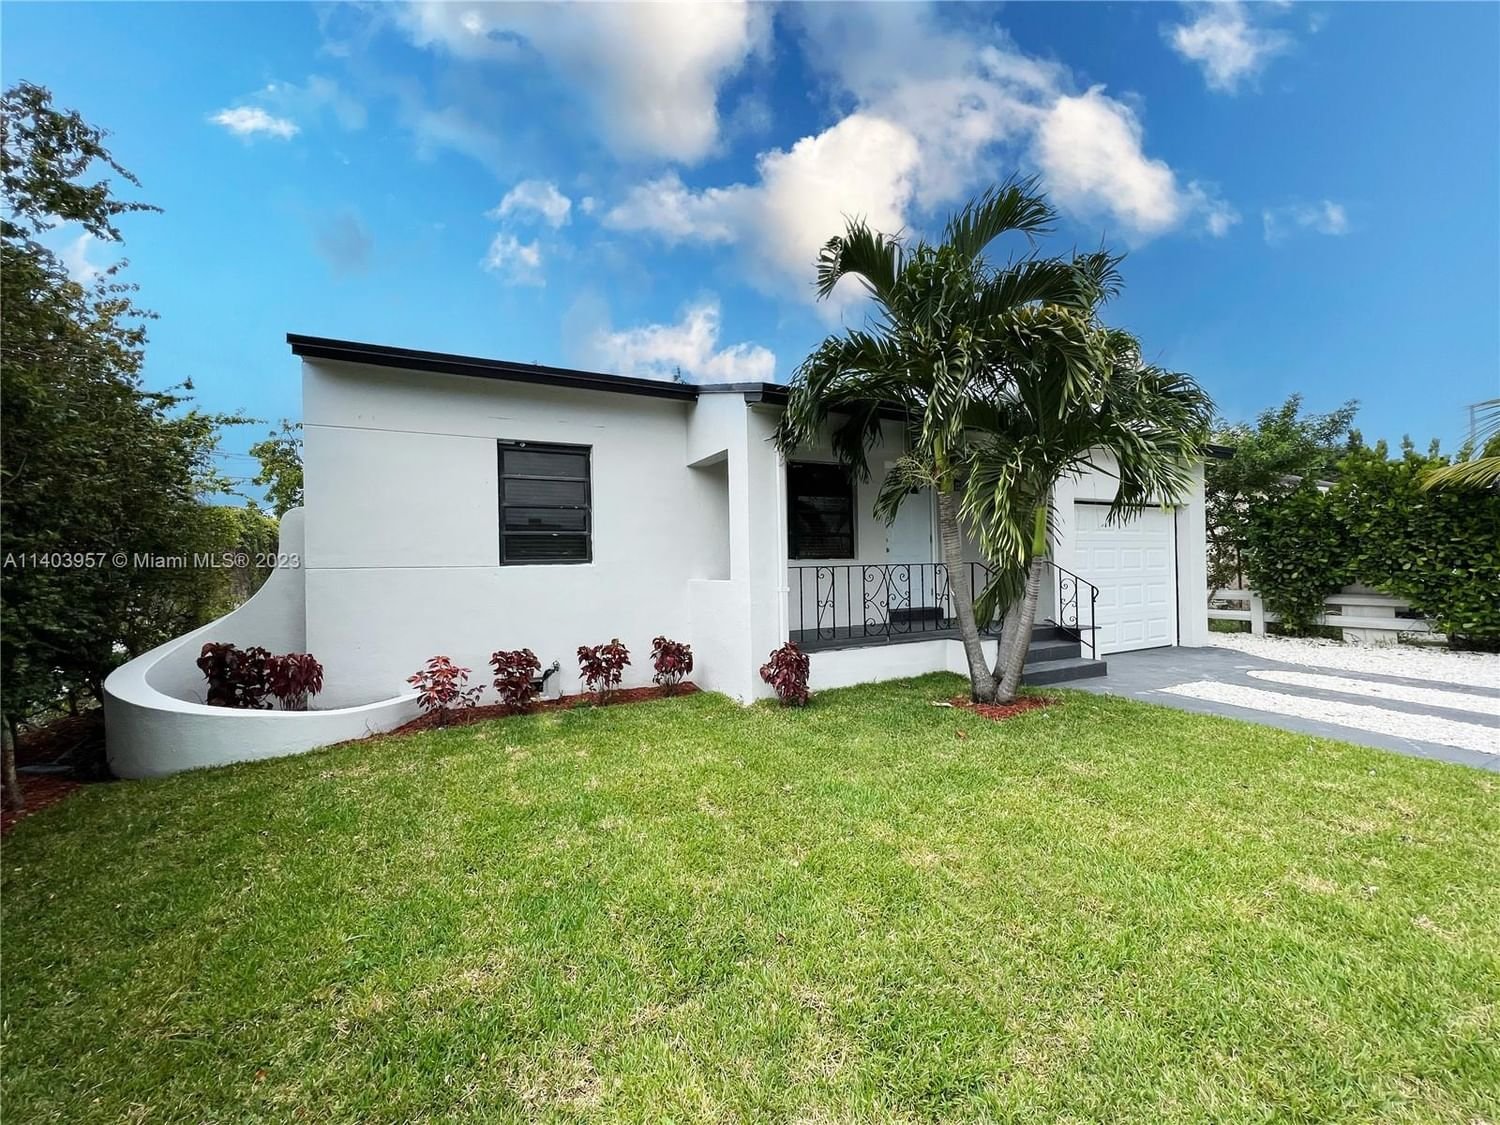 Real estate property located at 730 78th St, Miami-Dade County, Miami, FL